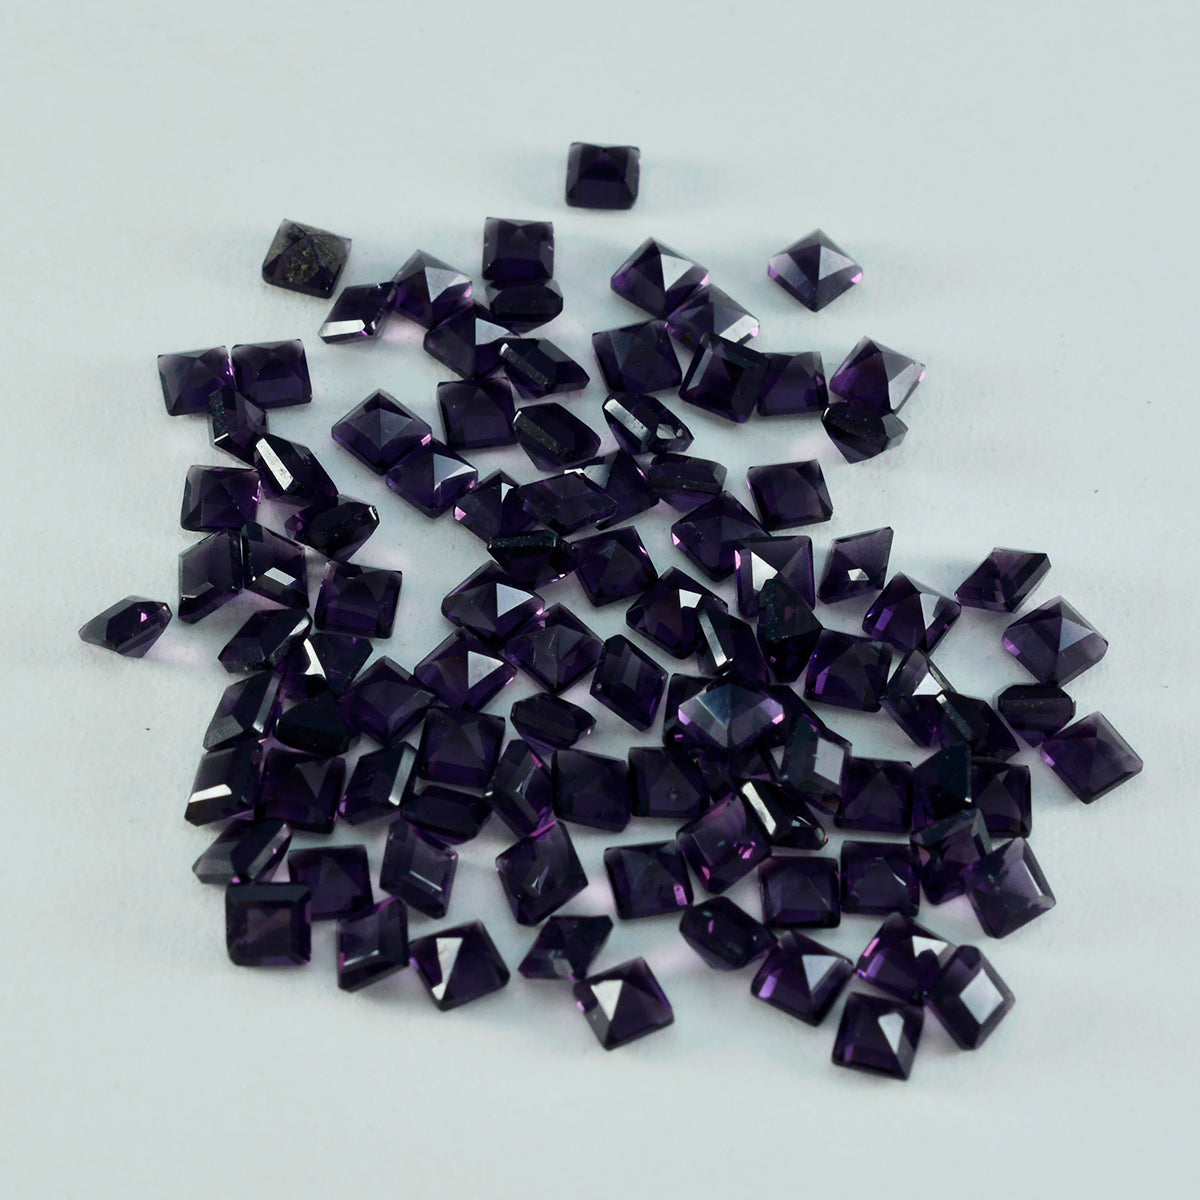 riyogems 1 pezzo di ametista viola cz sfaccettata 3x3 mm di forma quadrata, pietra sciolta di qualità fantastica